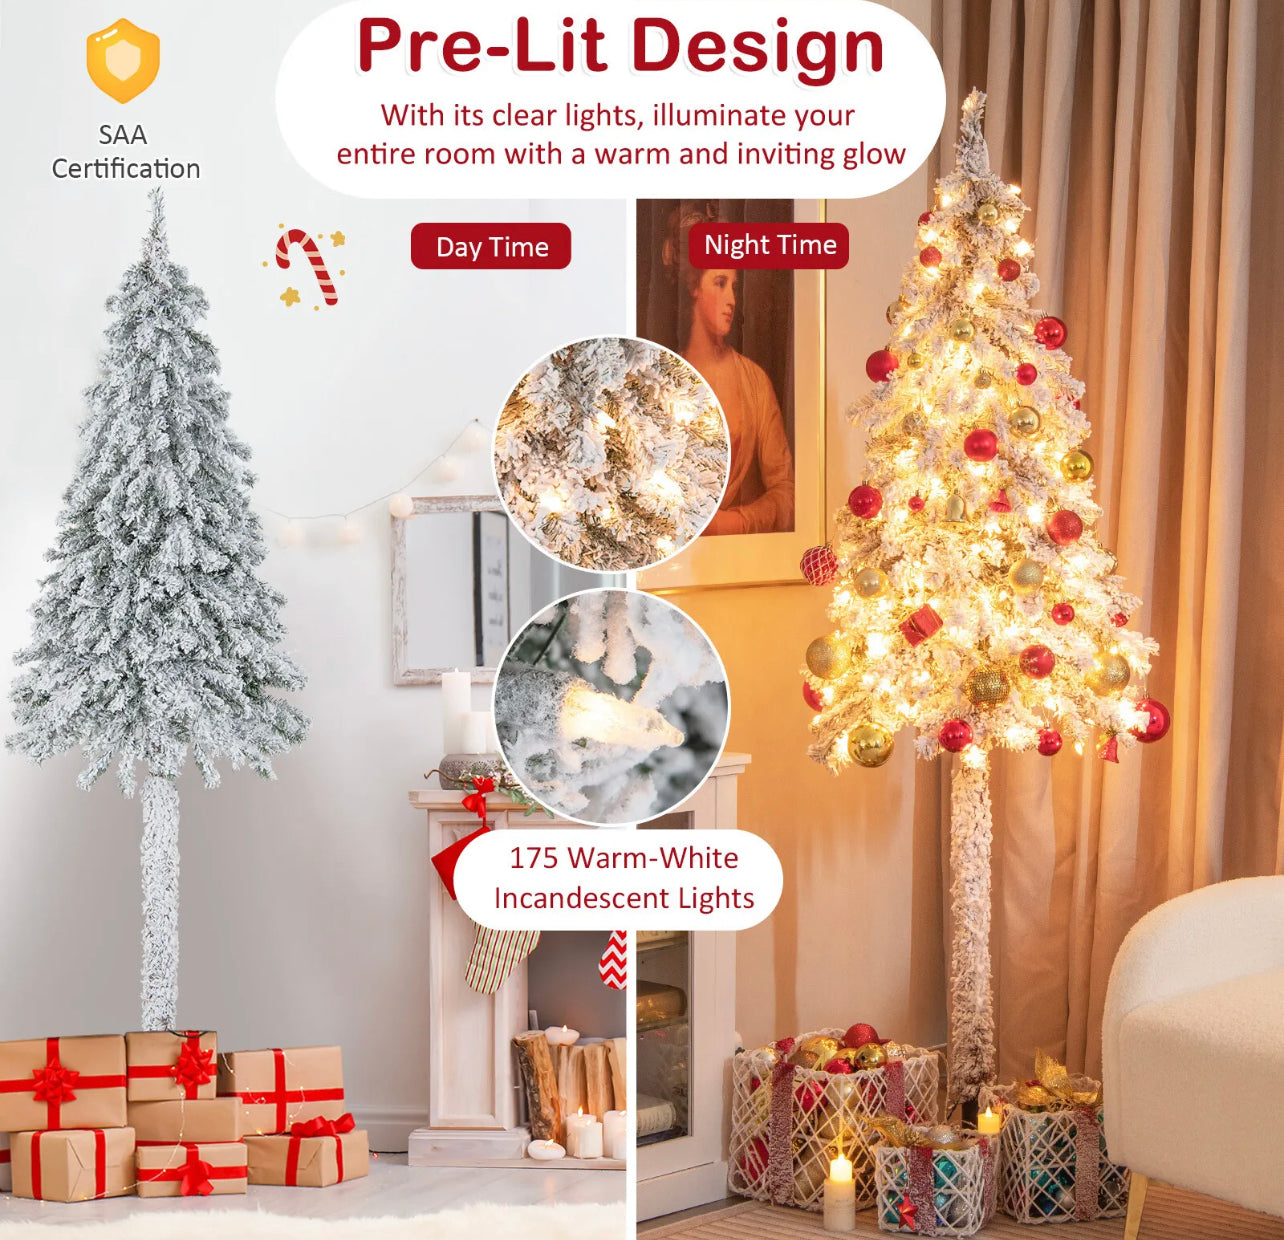 1.85M Pre-Lit Snow Flocked Christmas Tree Replaceable Incandescent Lights Decor